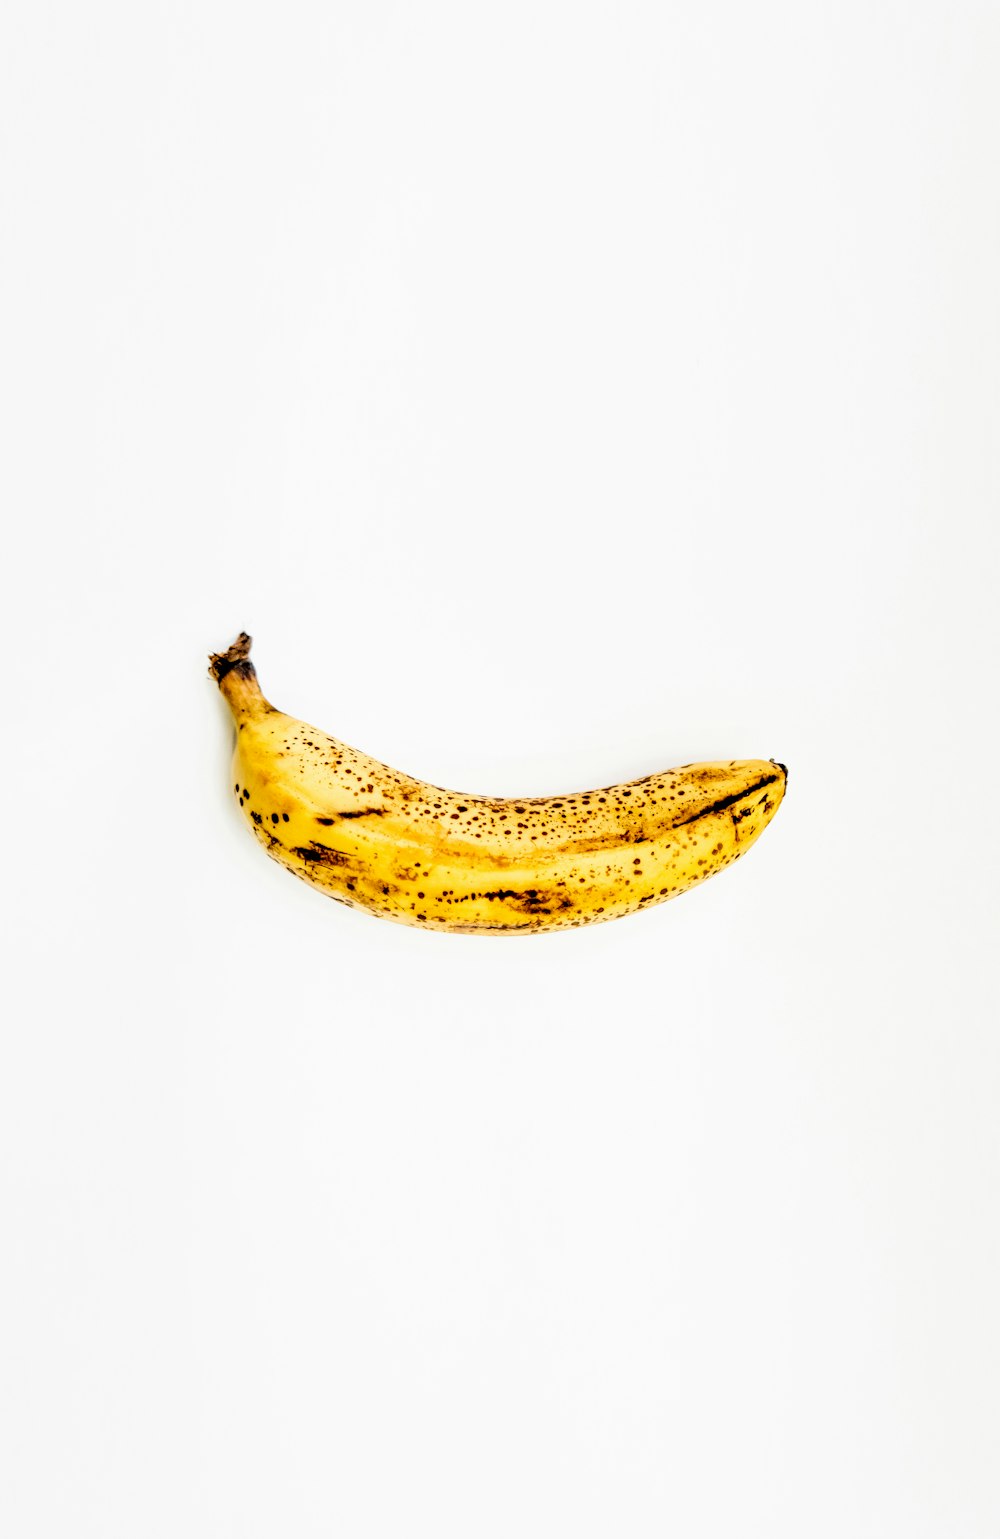 yellow banana on white surface